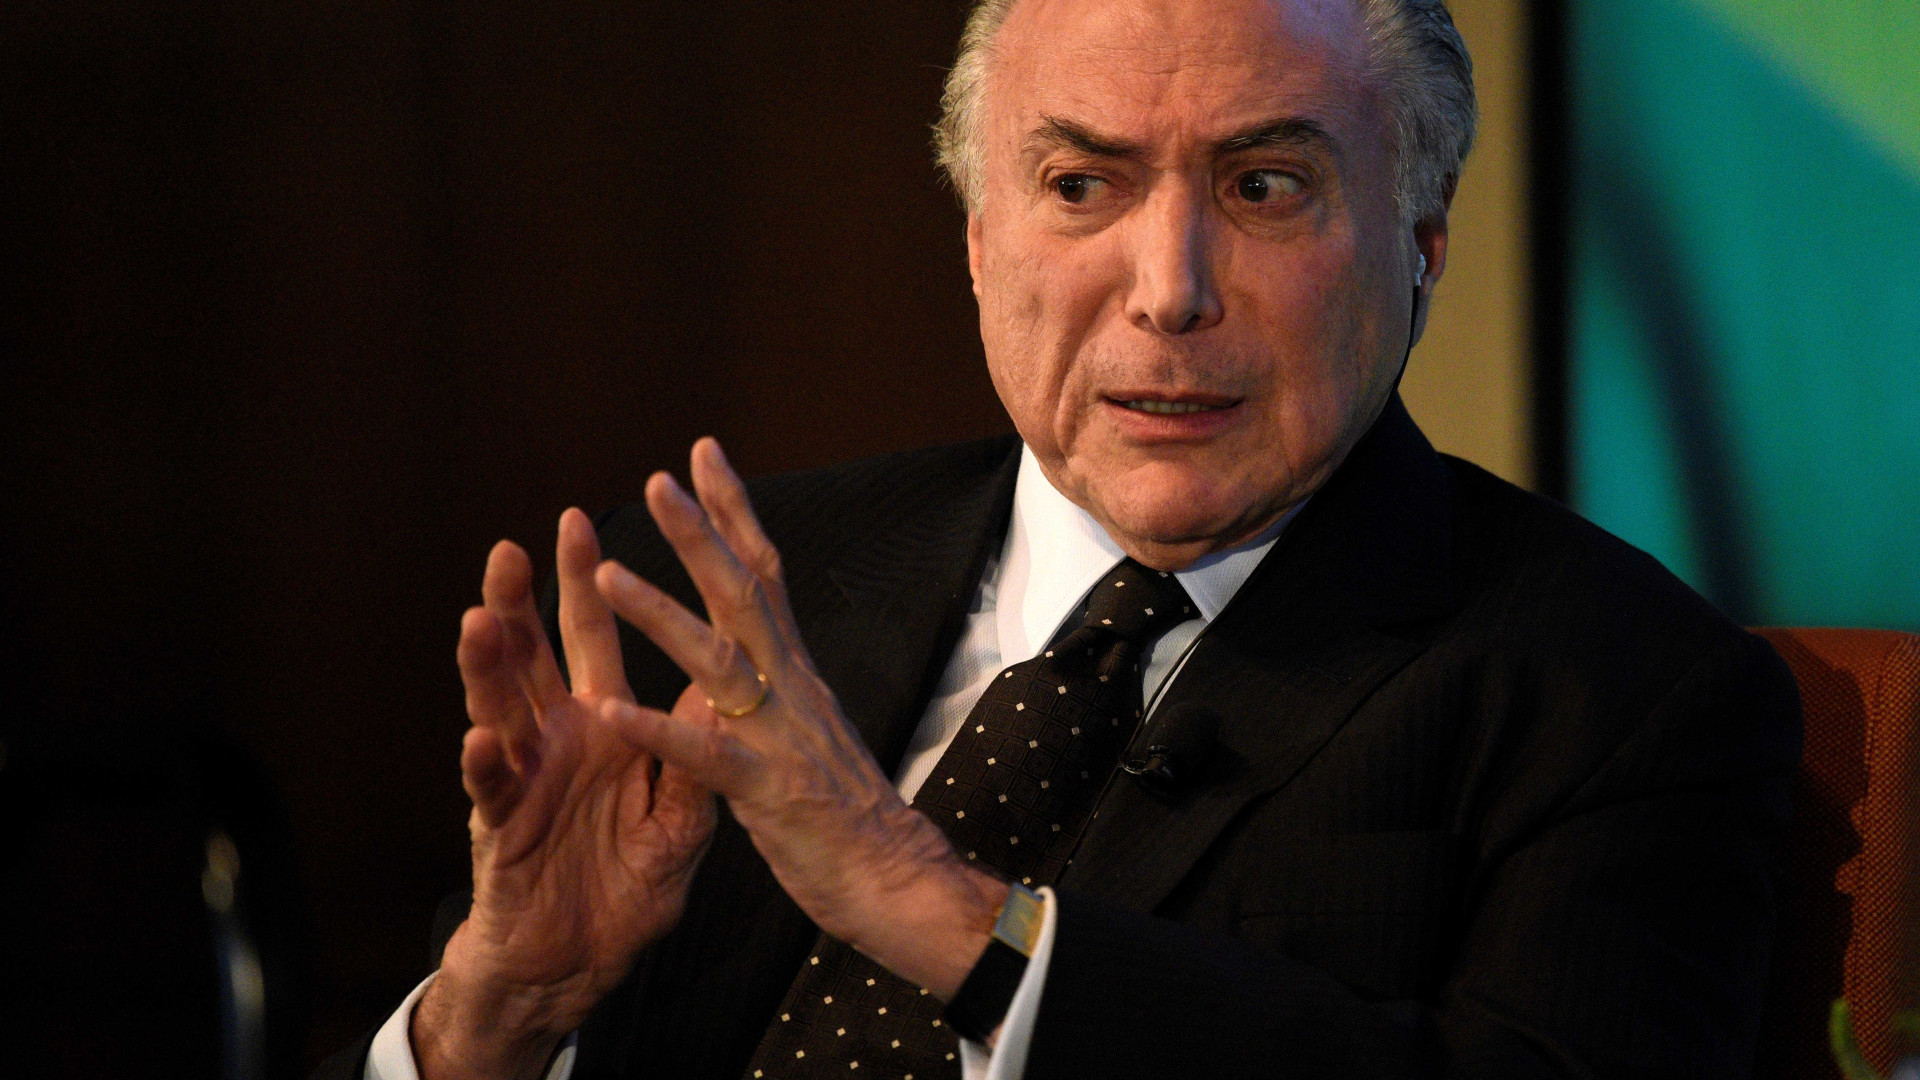 Com satélite, Brasil terá sistema digital democratizado, diz Temer